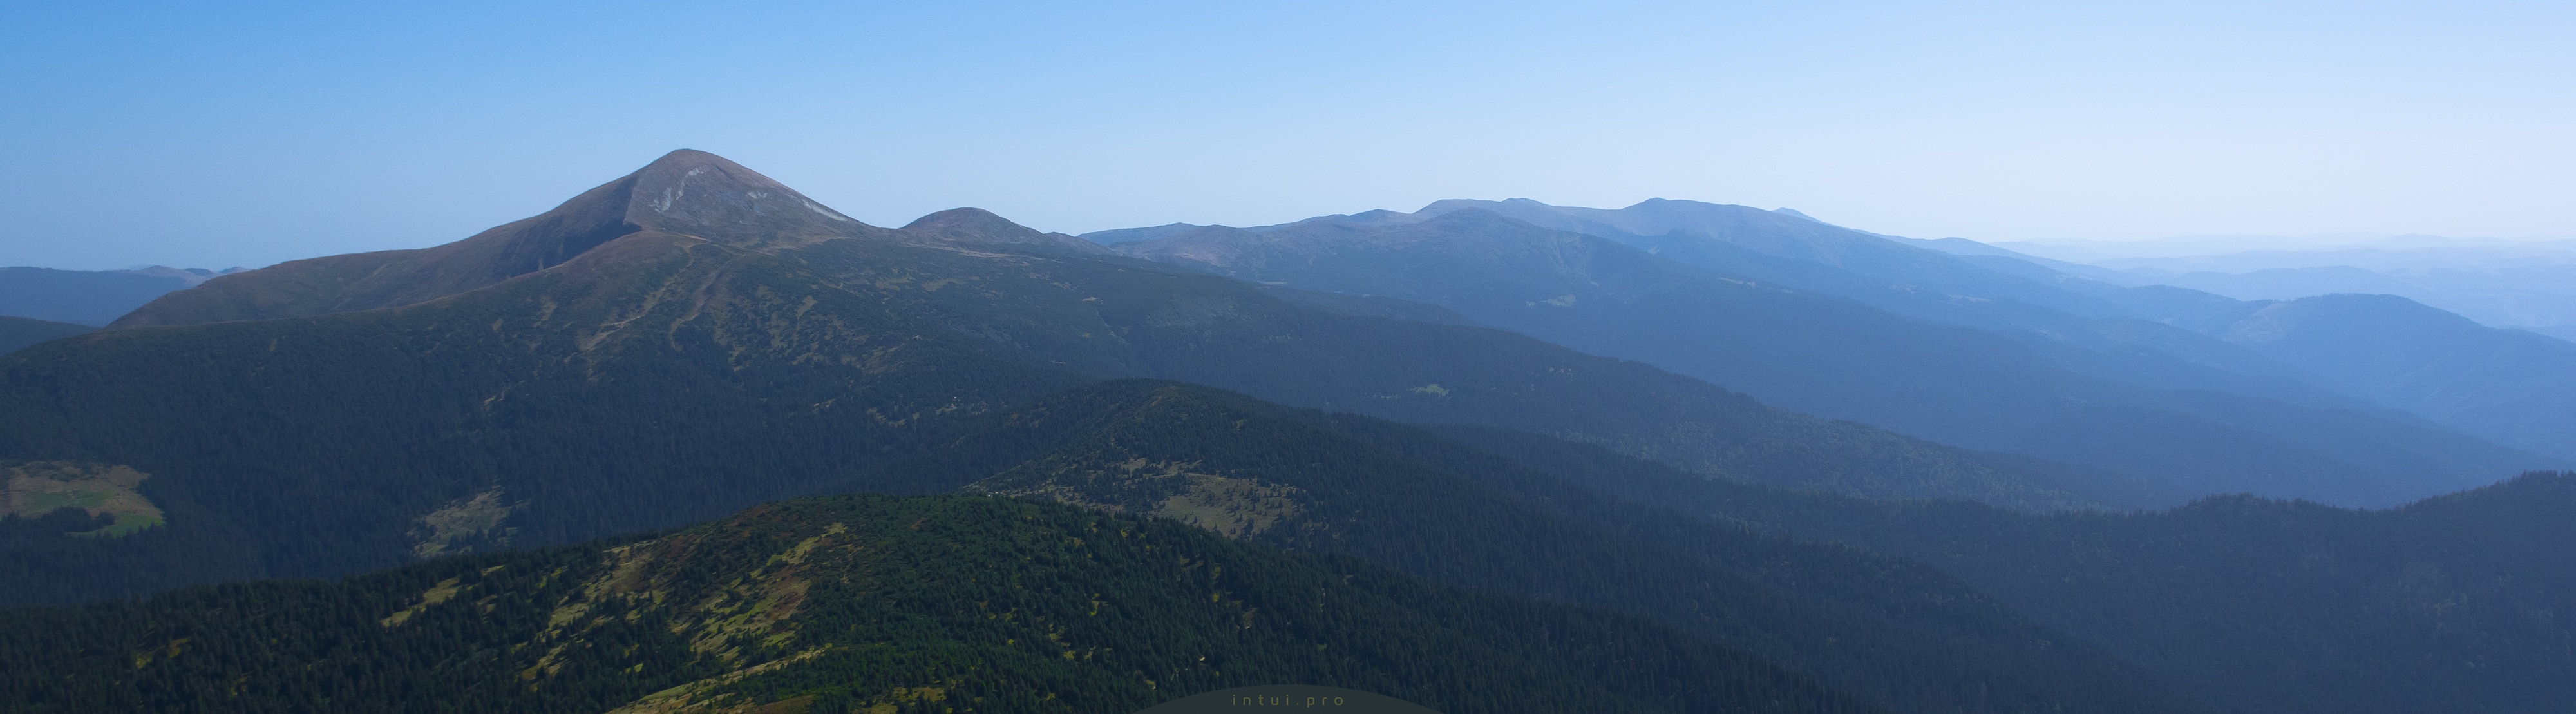 The Goverla mountain and the Chornohora ridge